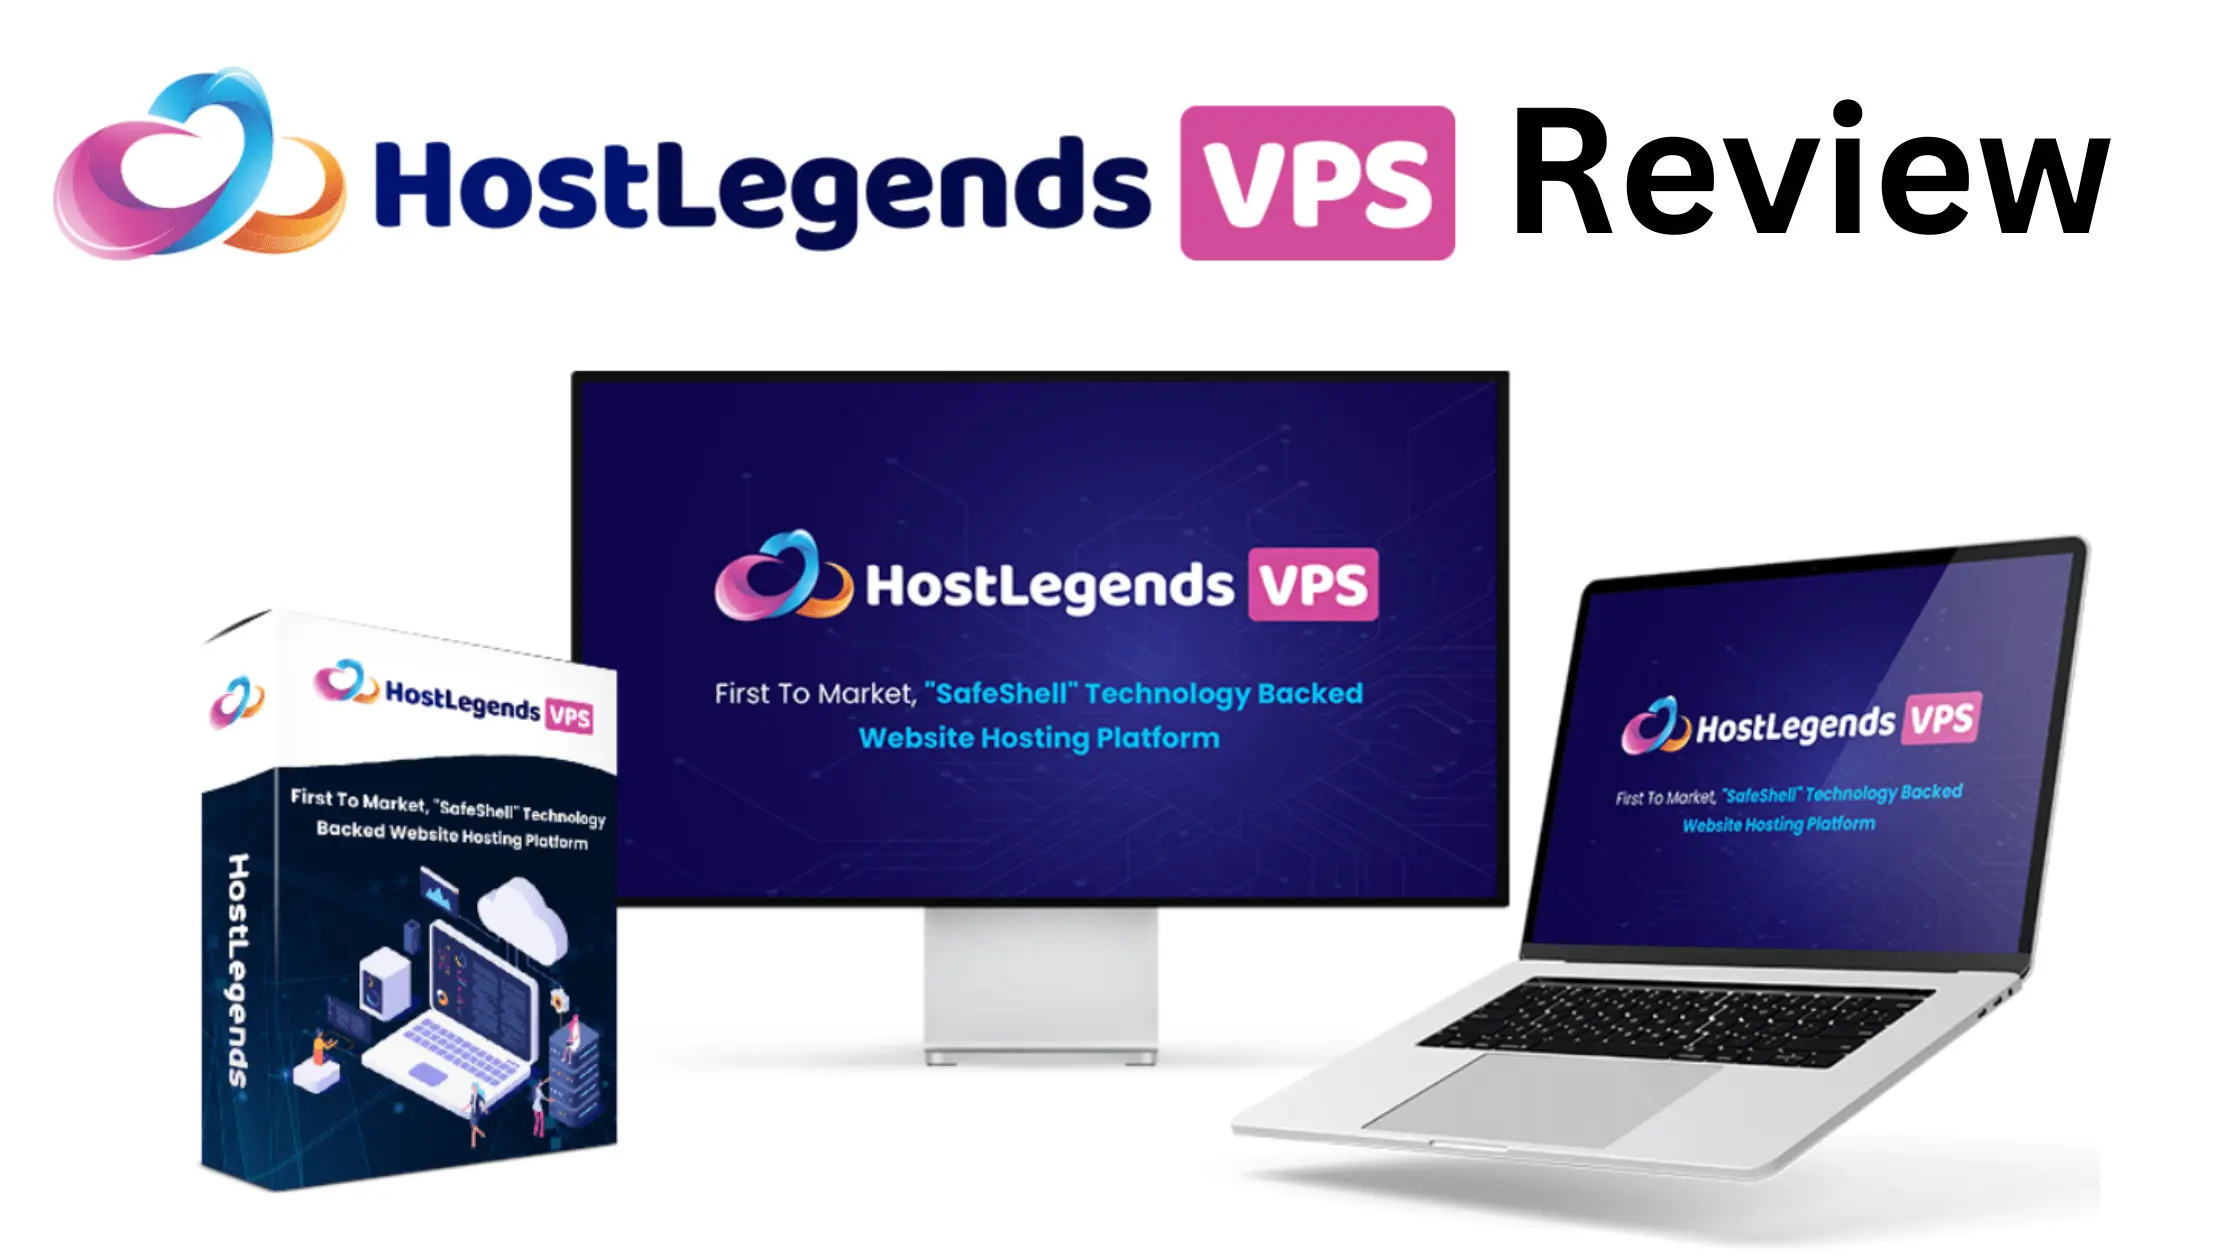 HostLegends VPS Review